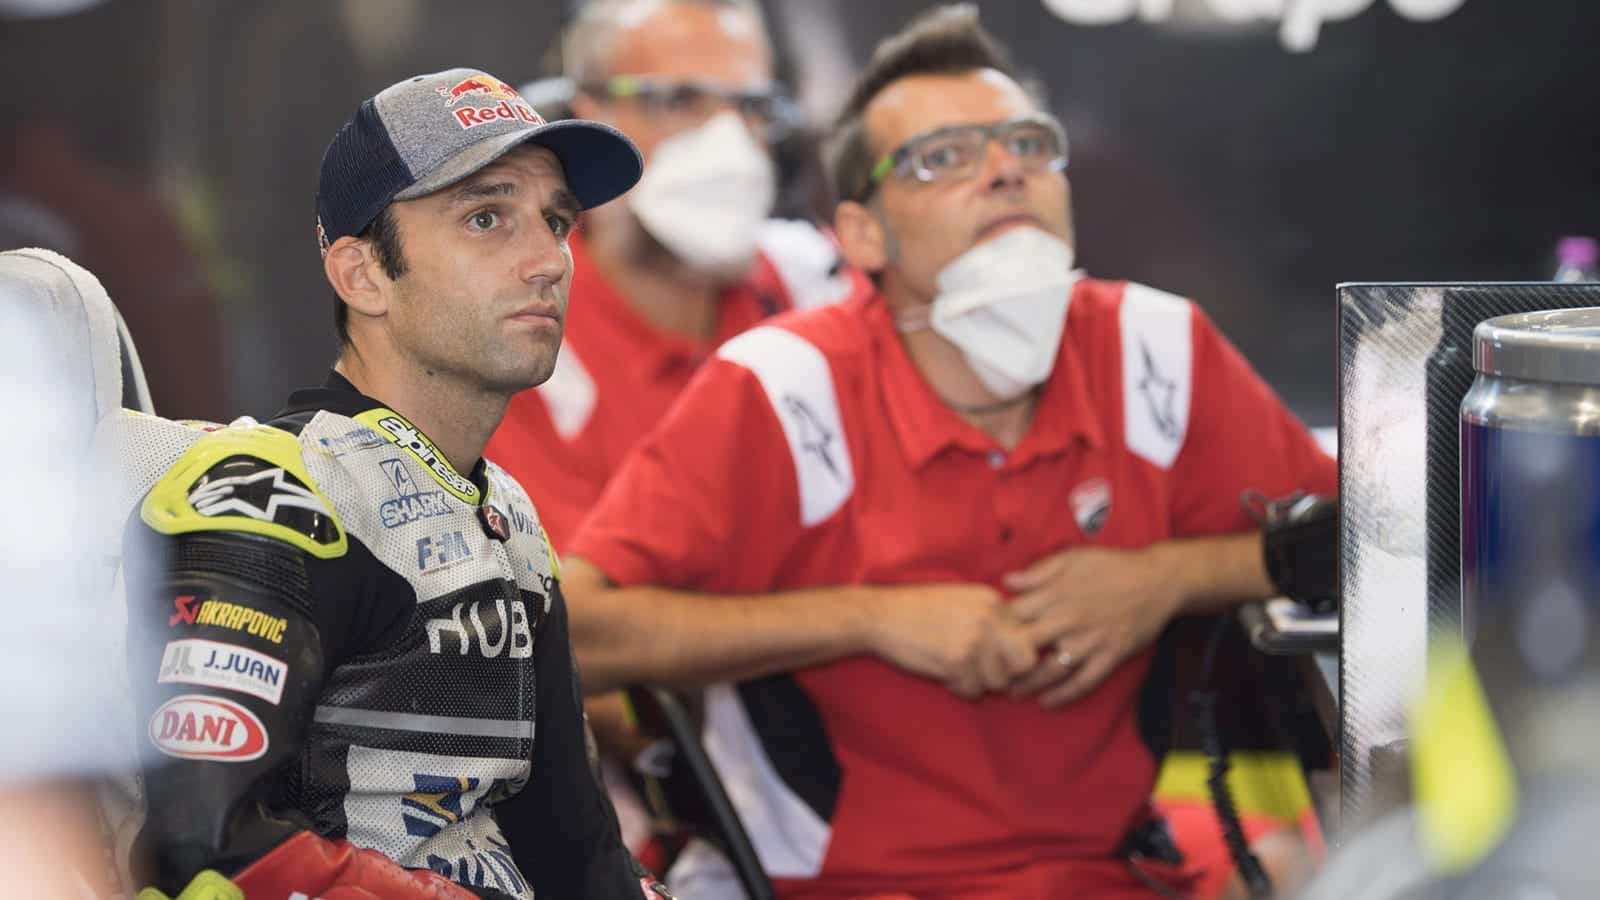 Johann Zarco sits in his pit garage at the 2020 MotoGP Austrian Grand Prix